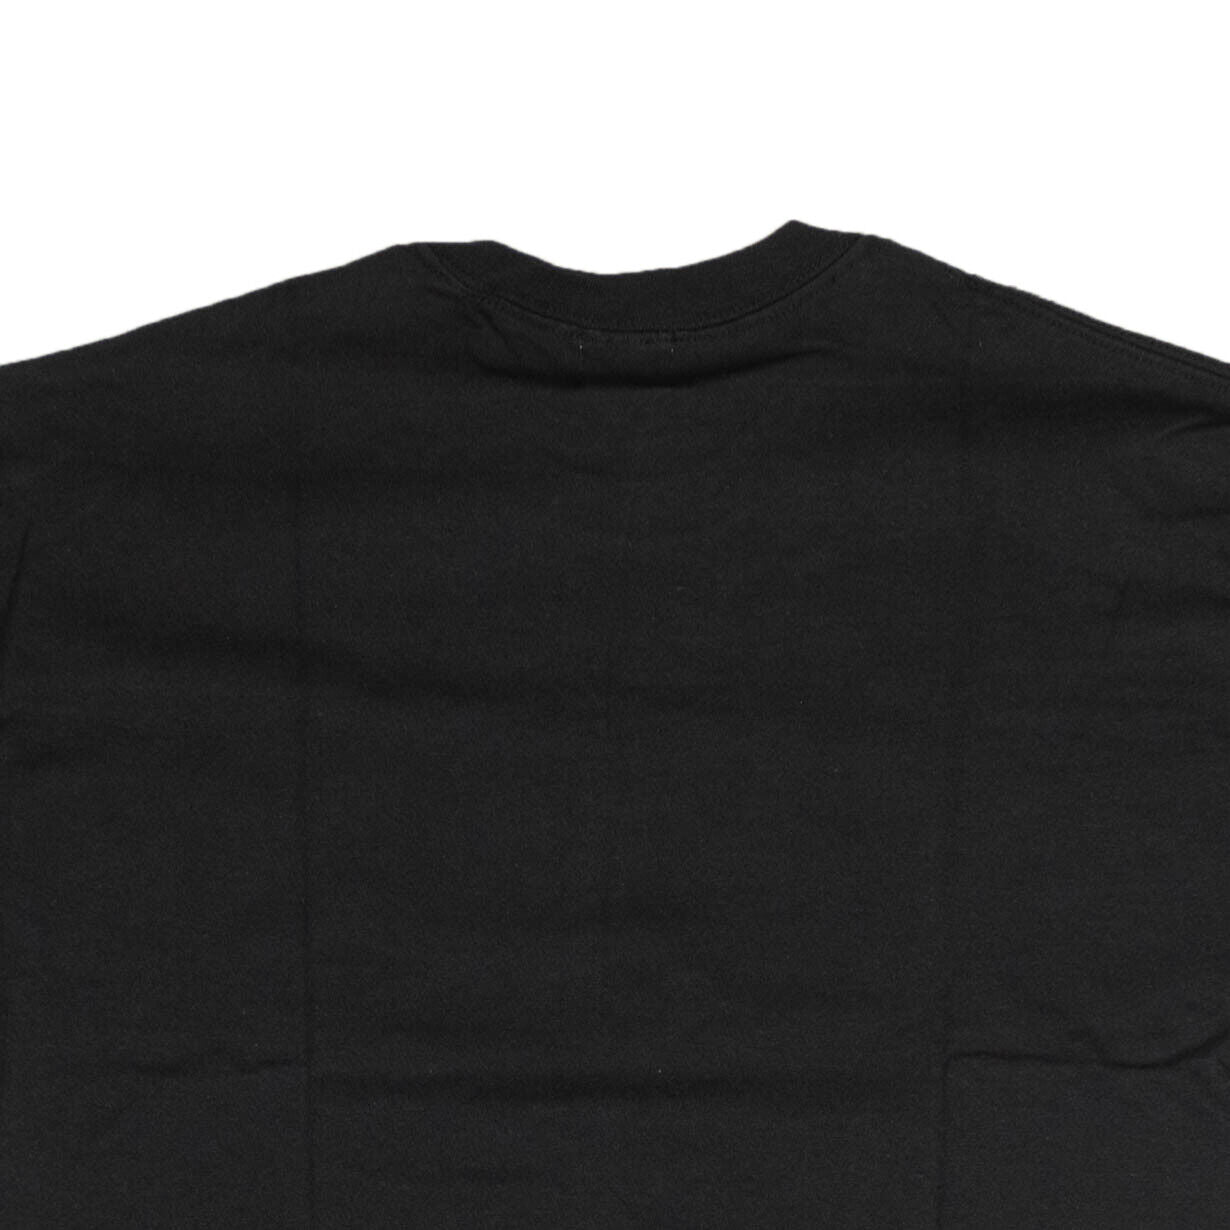 Denim By Vanquish & Fragment 19 Short Sleeve T-Shirt 4 - Black